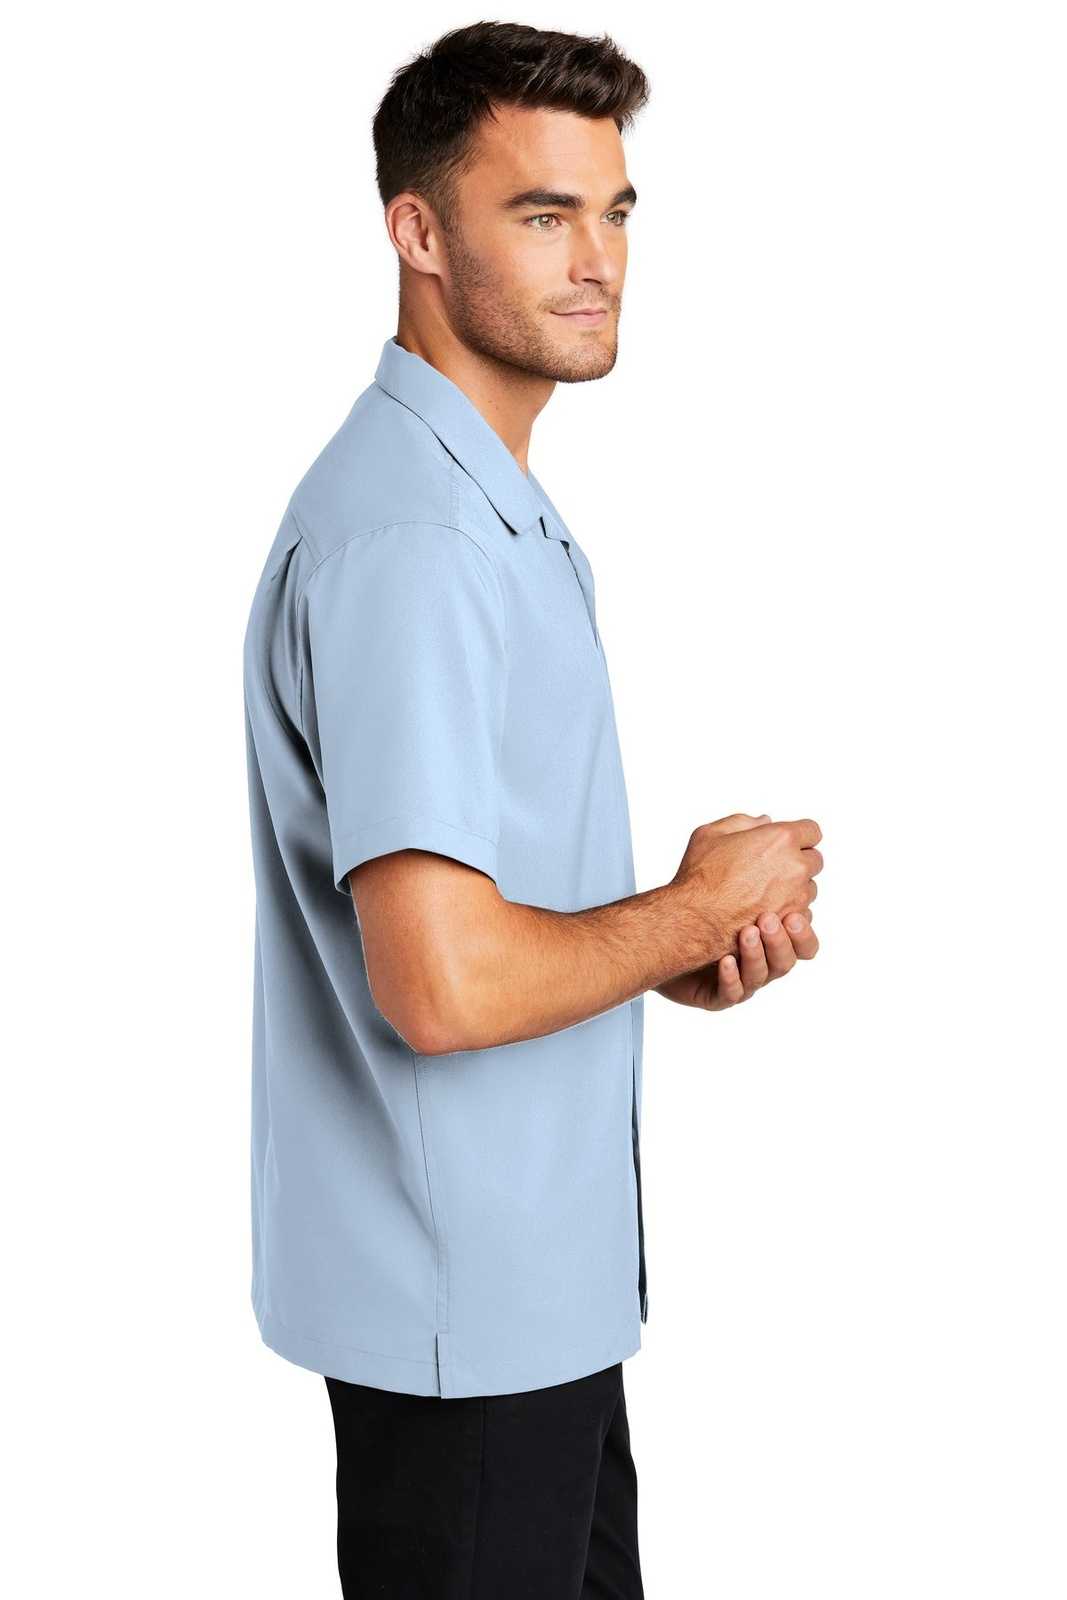 Port Authority W400 Short Sleeve Performance Staff Shirt - Cloud Blue - HIT a Double - 3